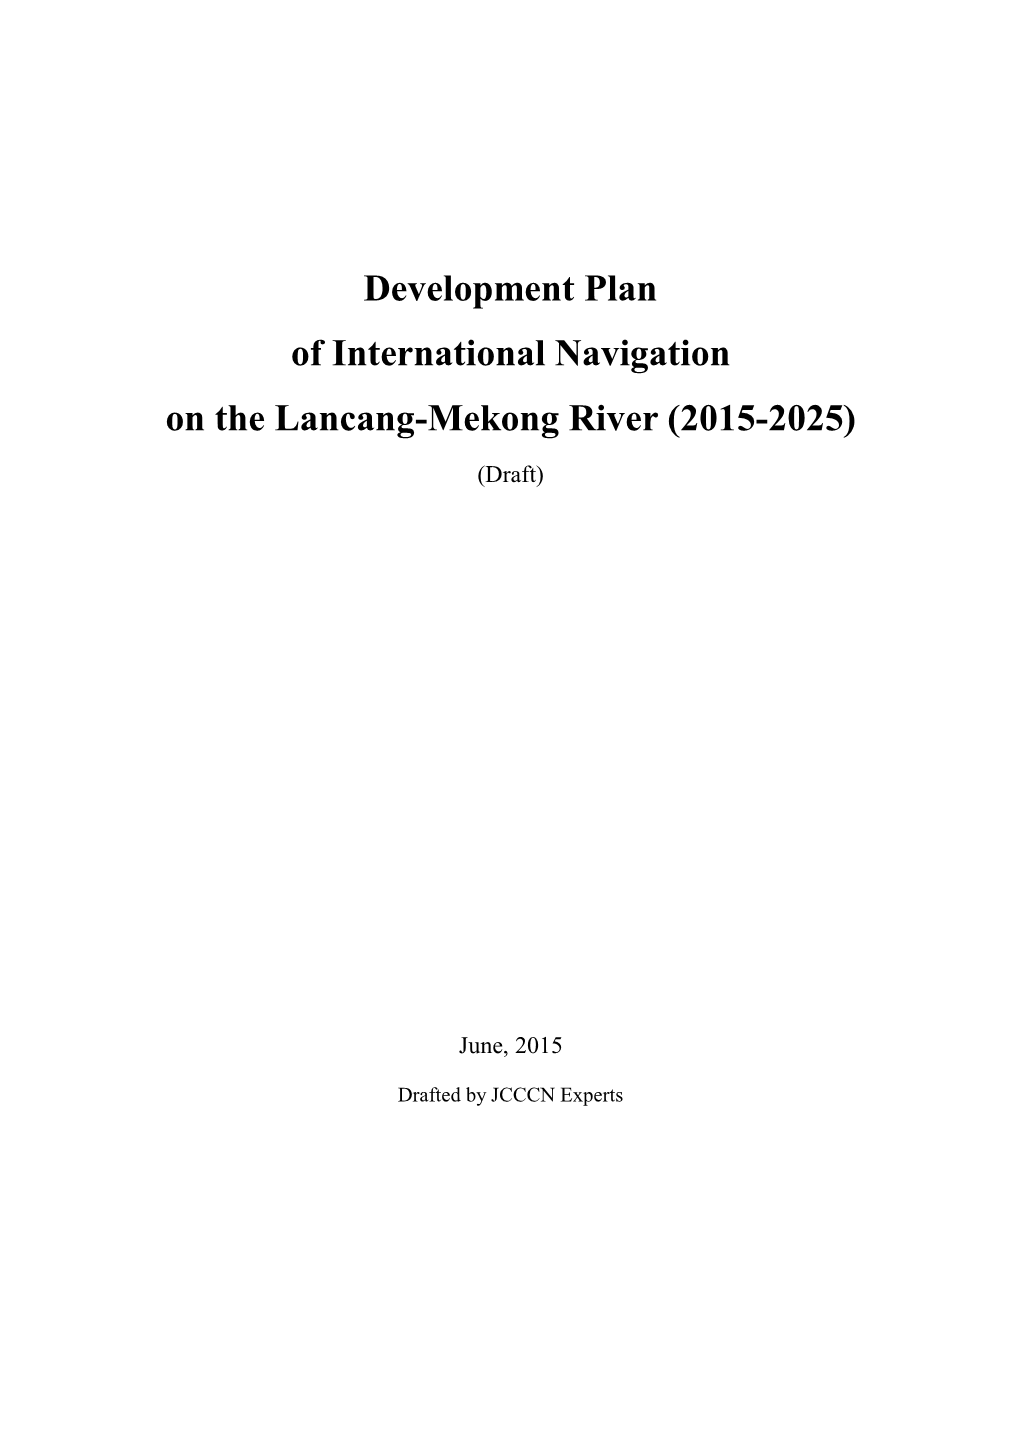 Development Plan of International Navigation on the Lancang-Mekong River (2015-2025)